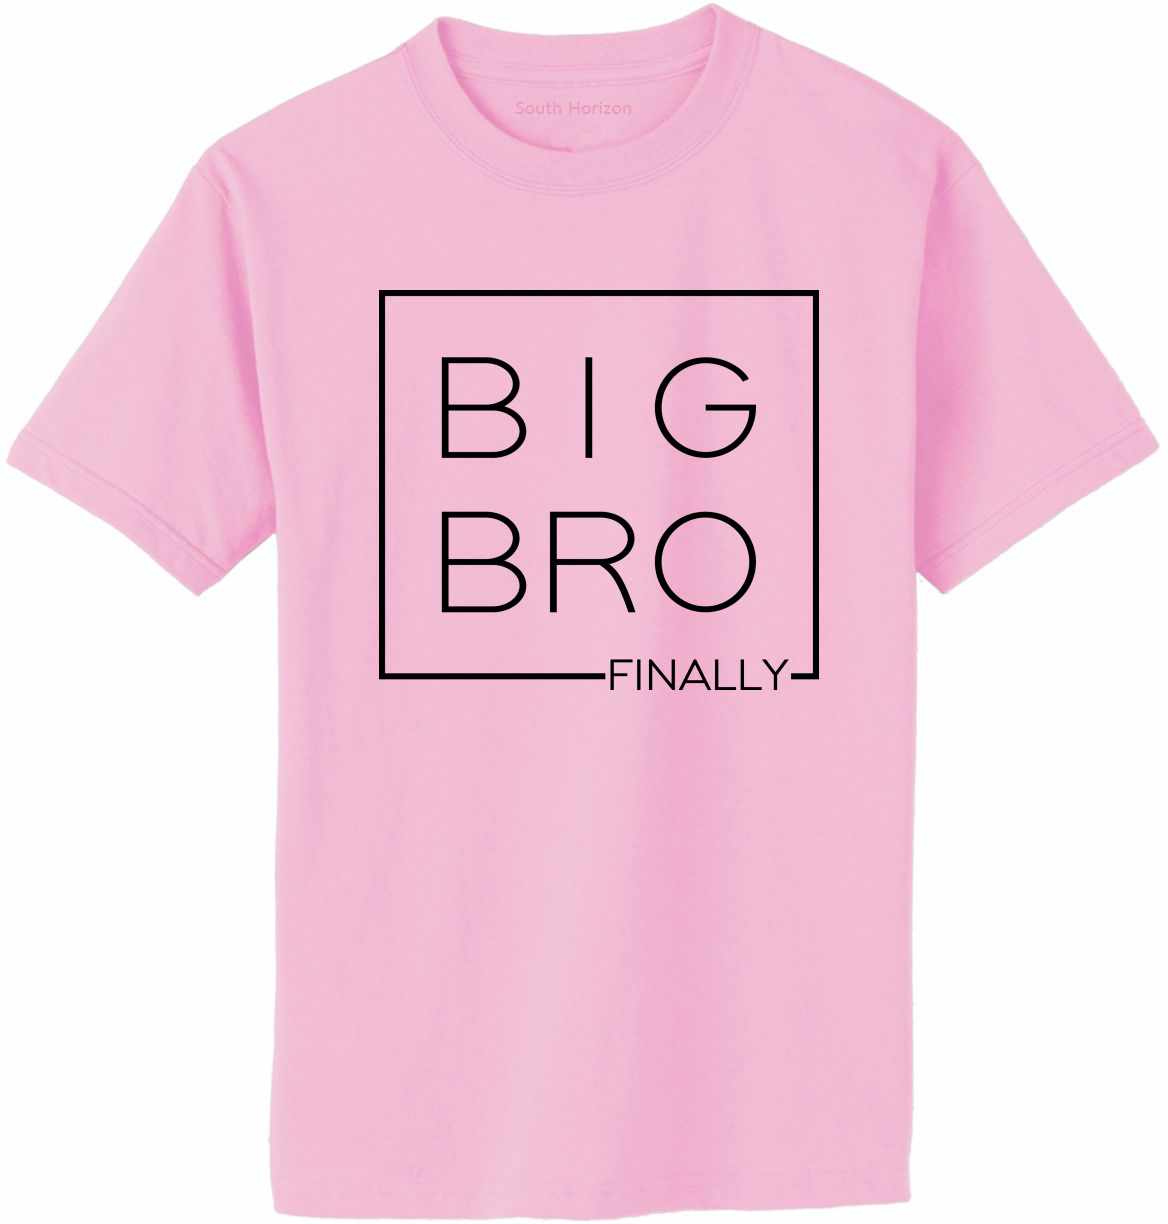 Big Bro Finally- Big Brother Boxed on Adult T-Shirt